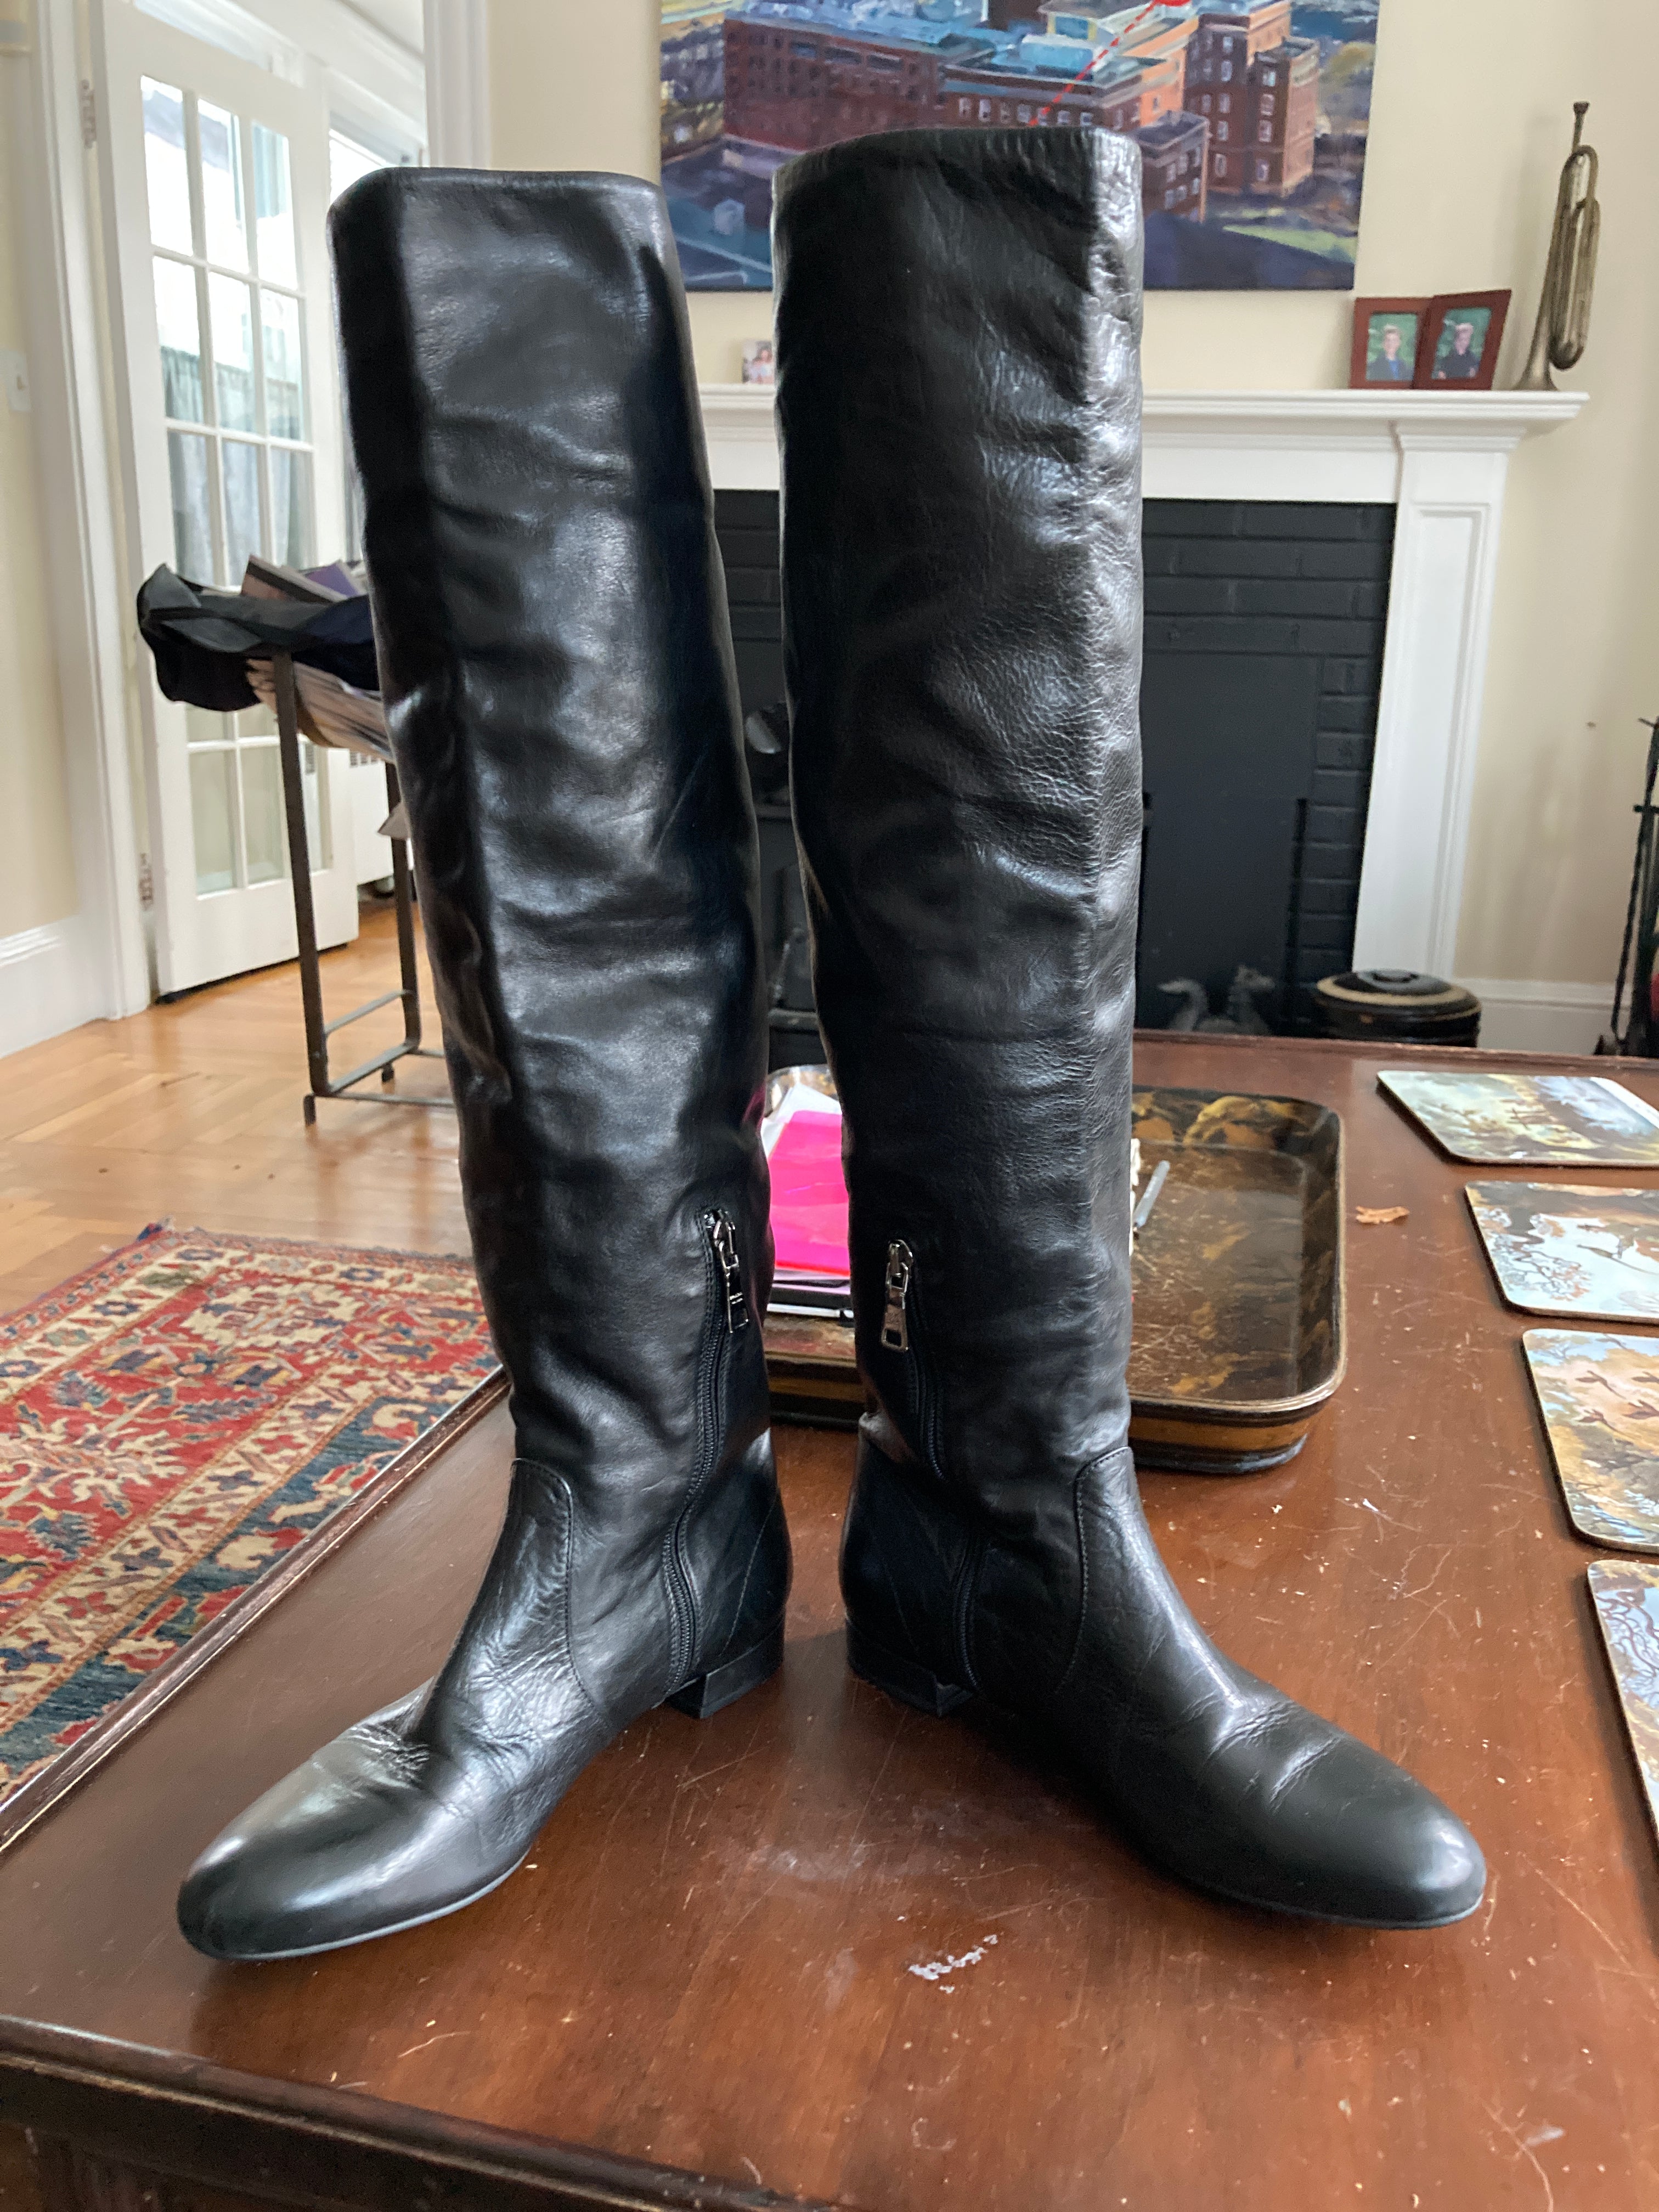 Prada Black Leather Tall Riding Boots, 36.5